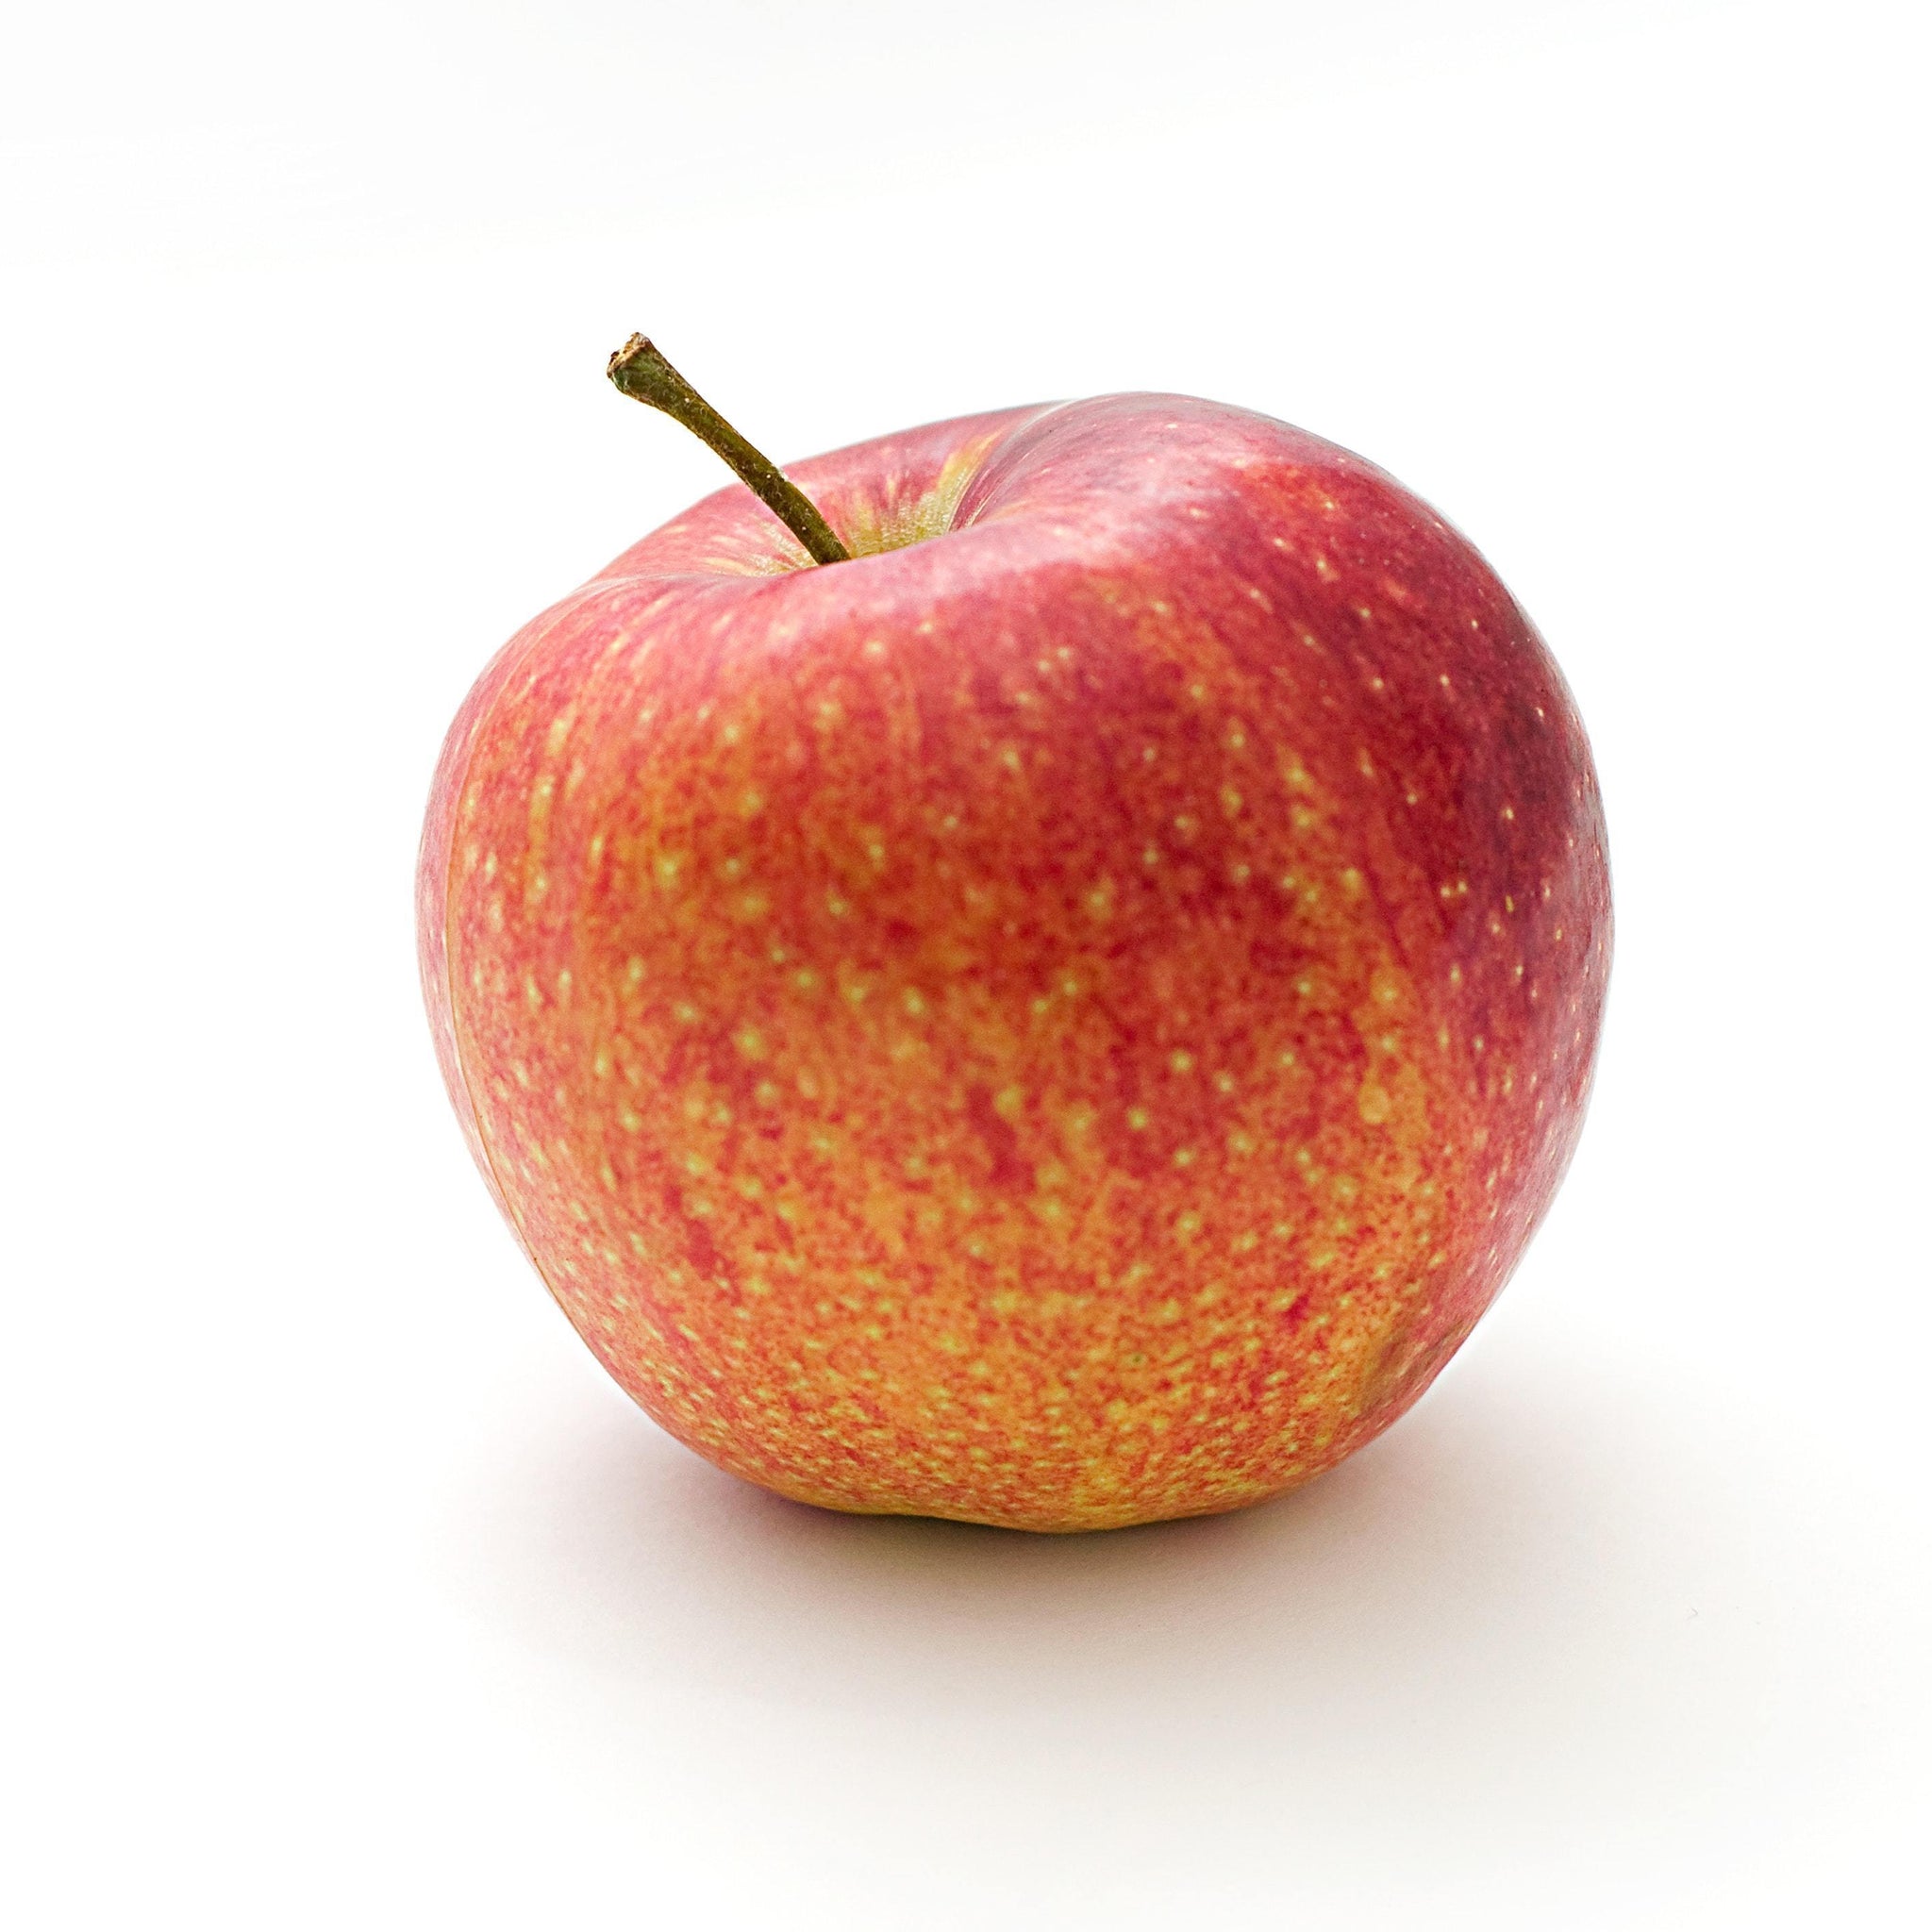 bvi>Gala Apples - each